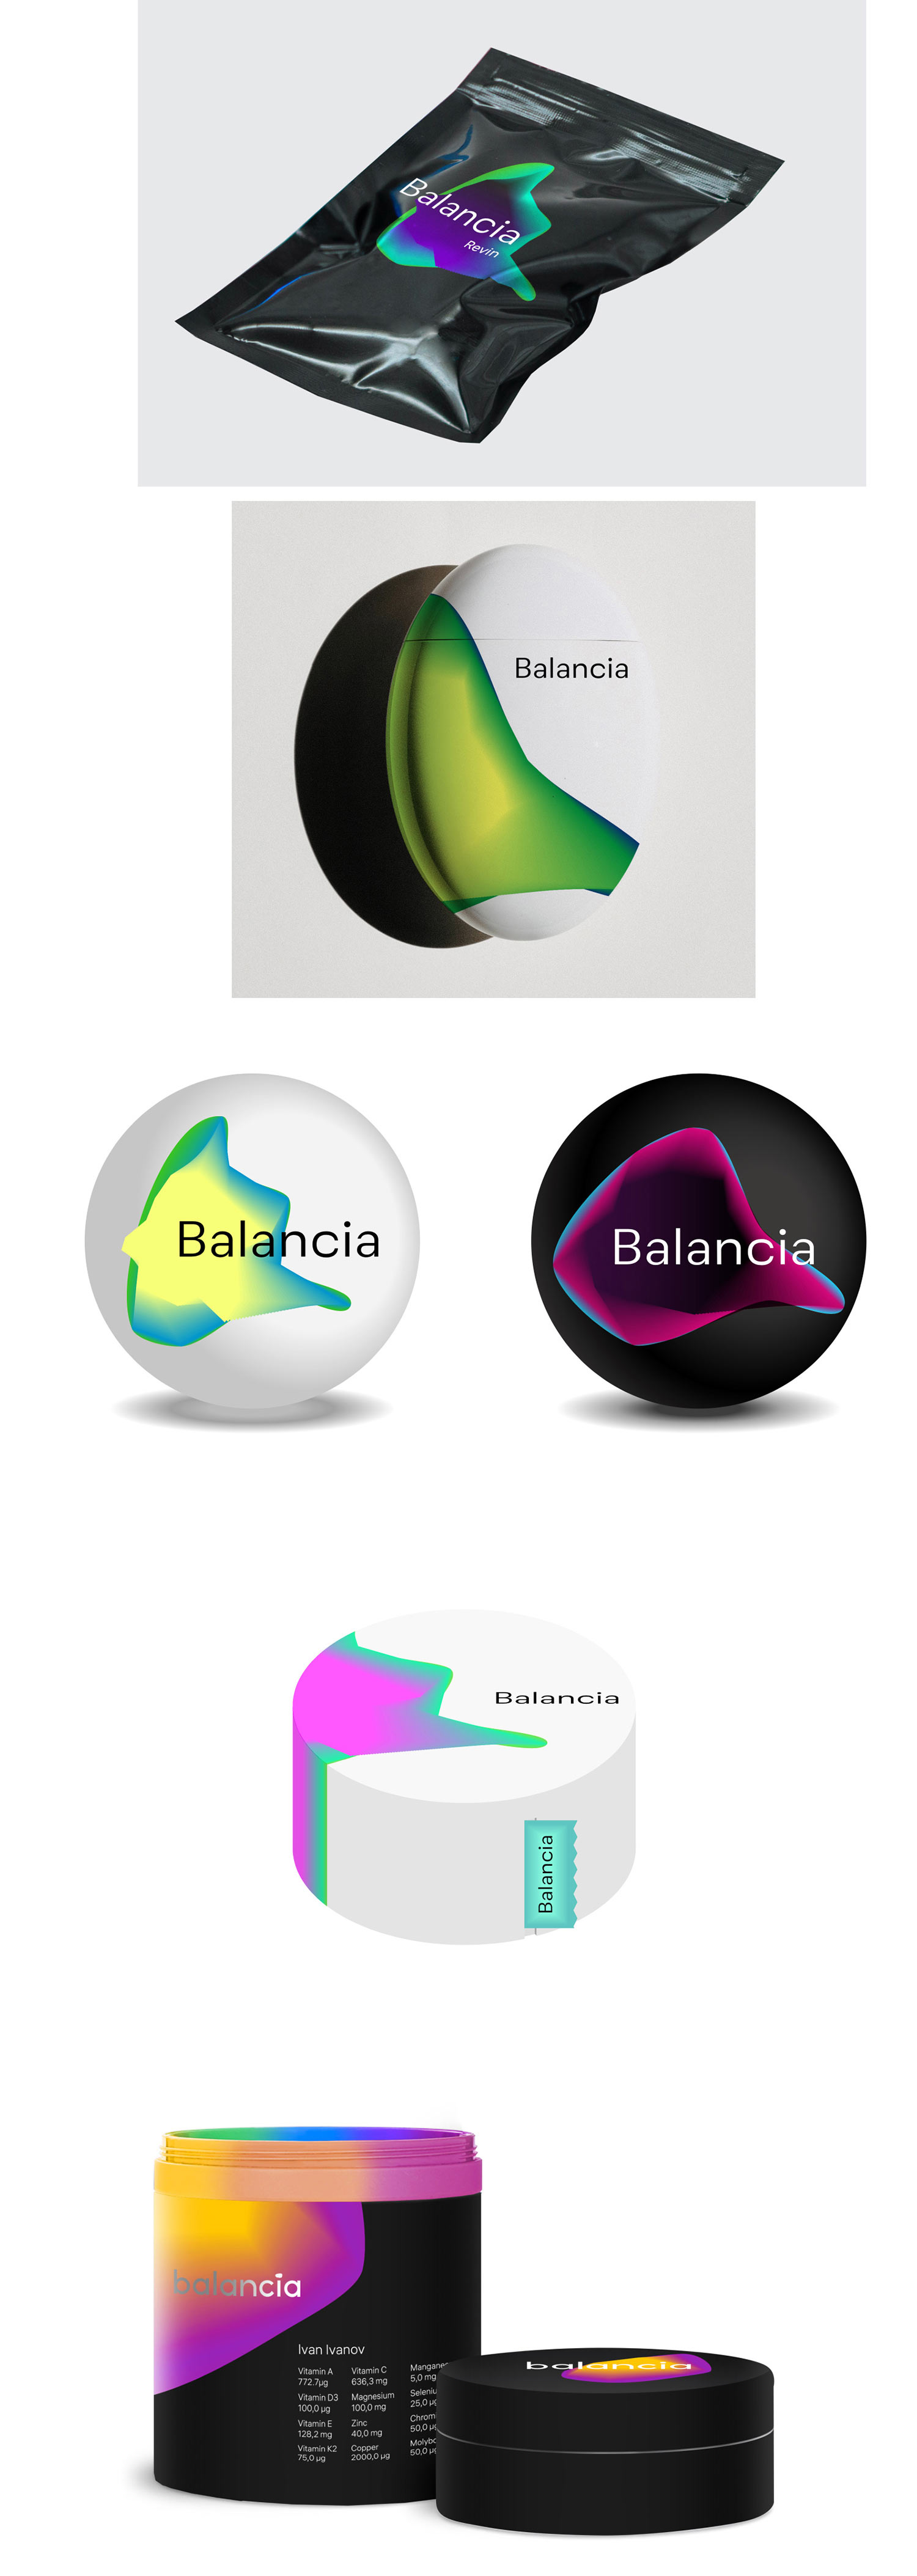 balancia package process 02